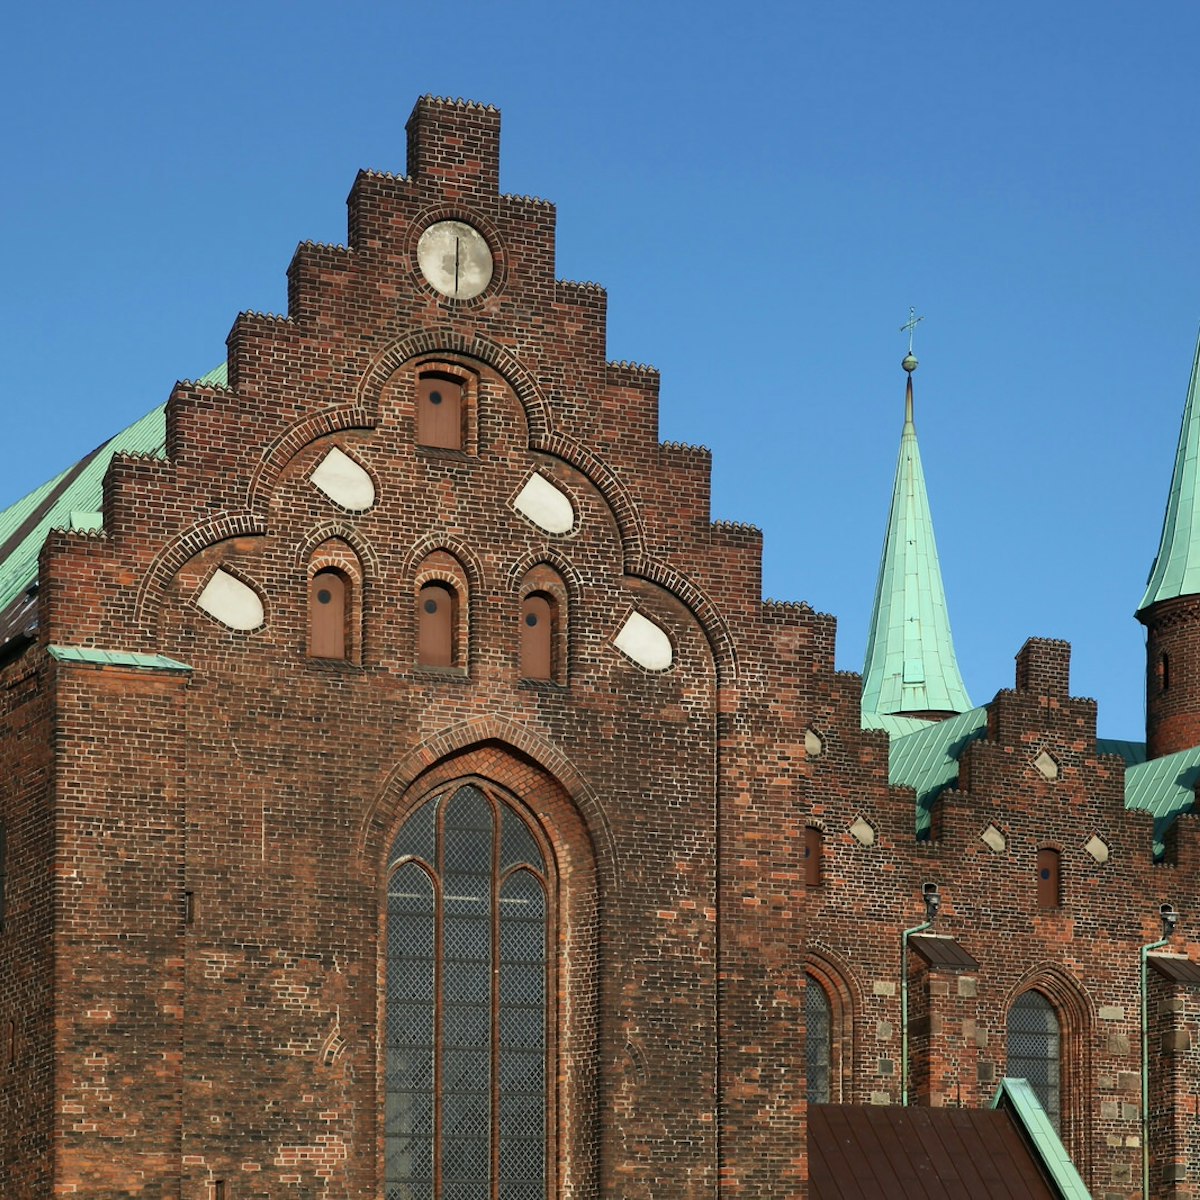 Cathedral of Aarhus in Denmark